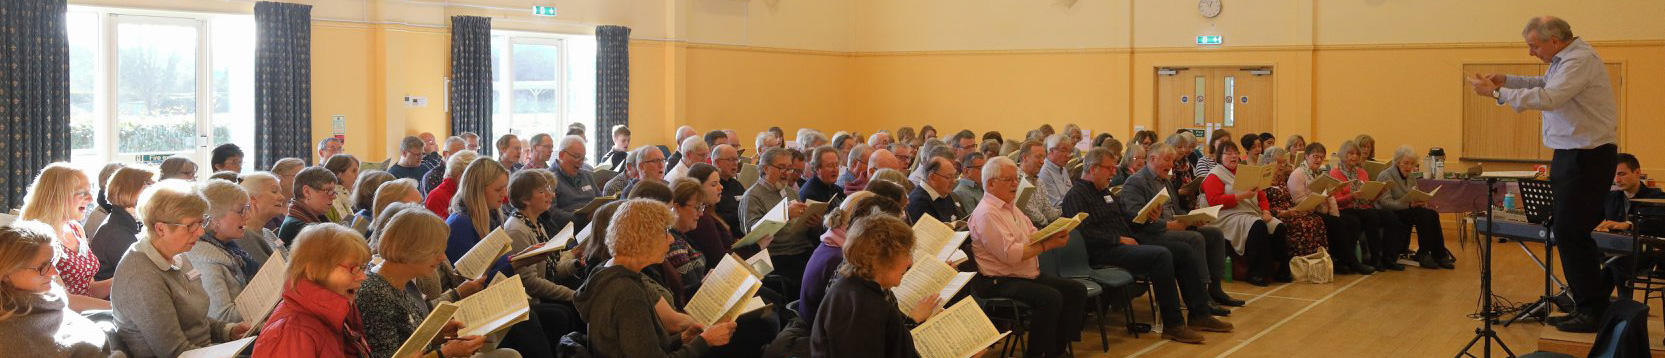 Brahms Requiem Singing Day, 8 February 2020